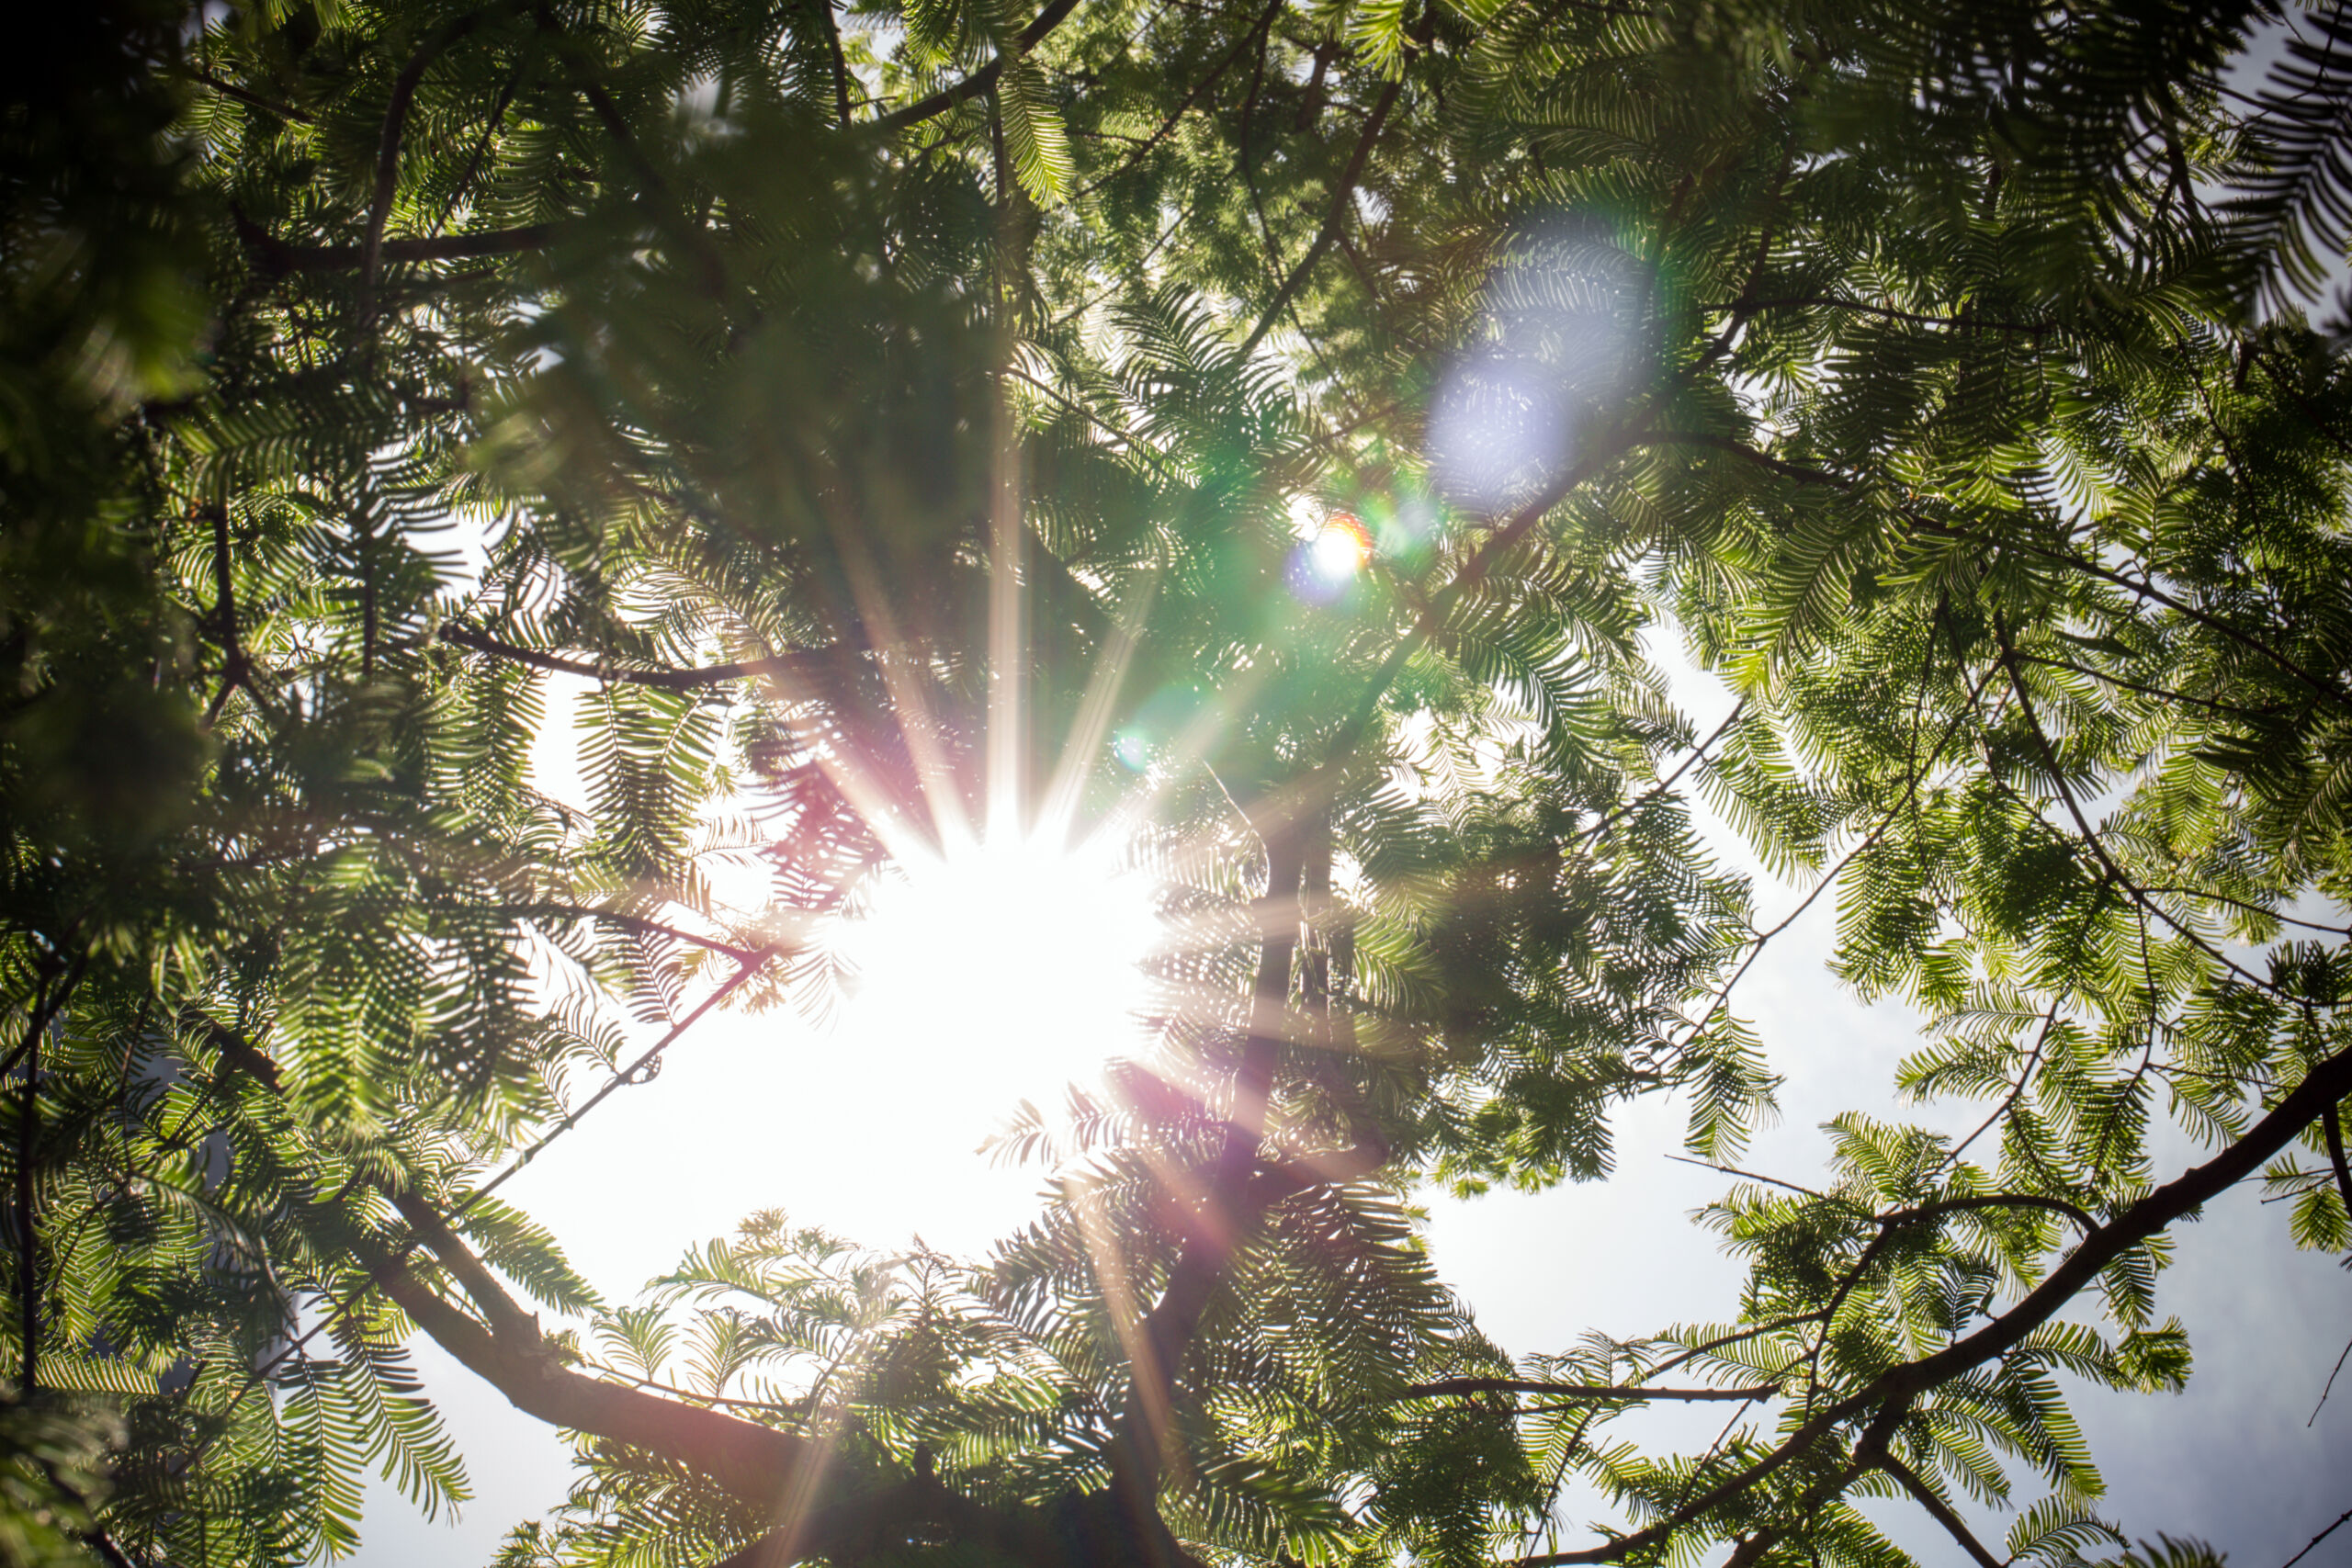 Sun viewed through trees